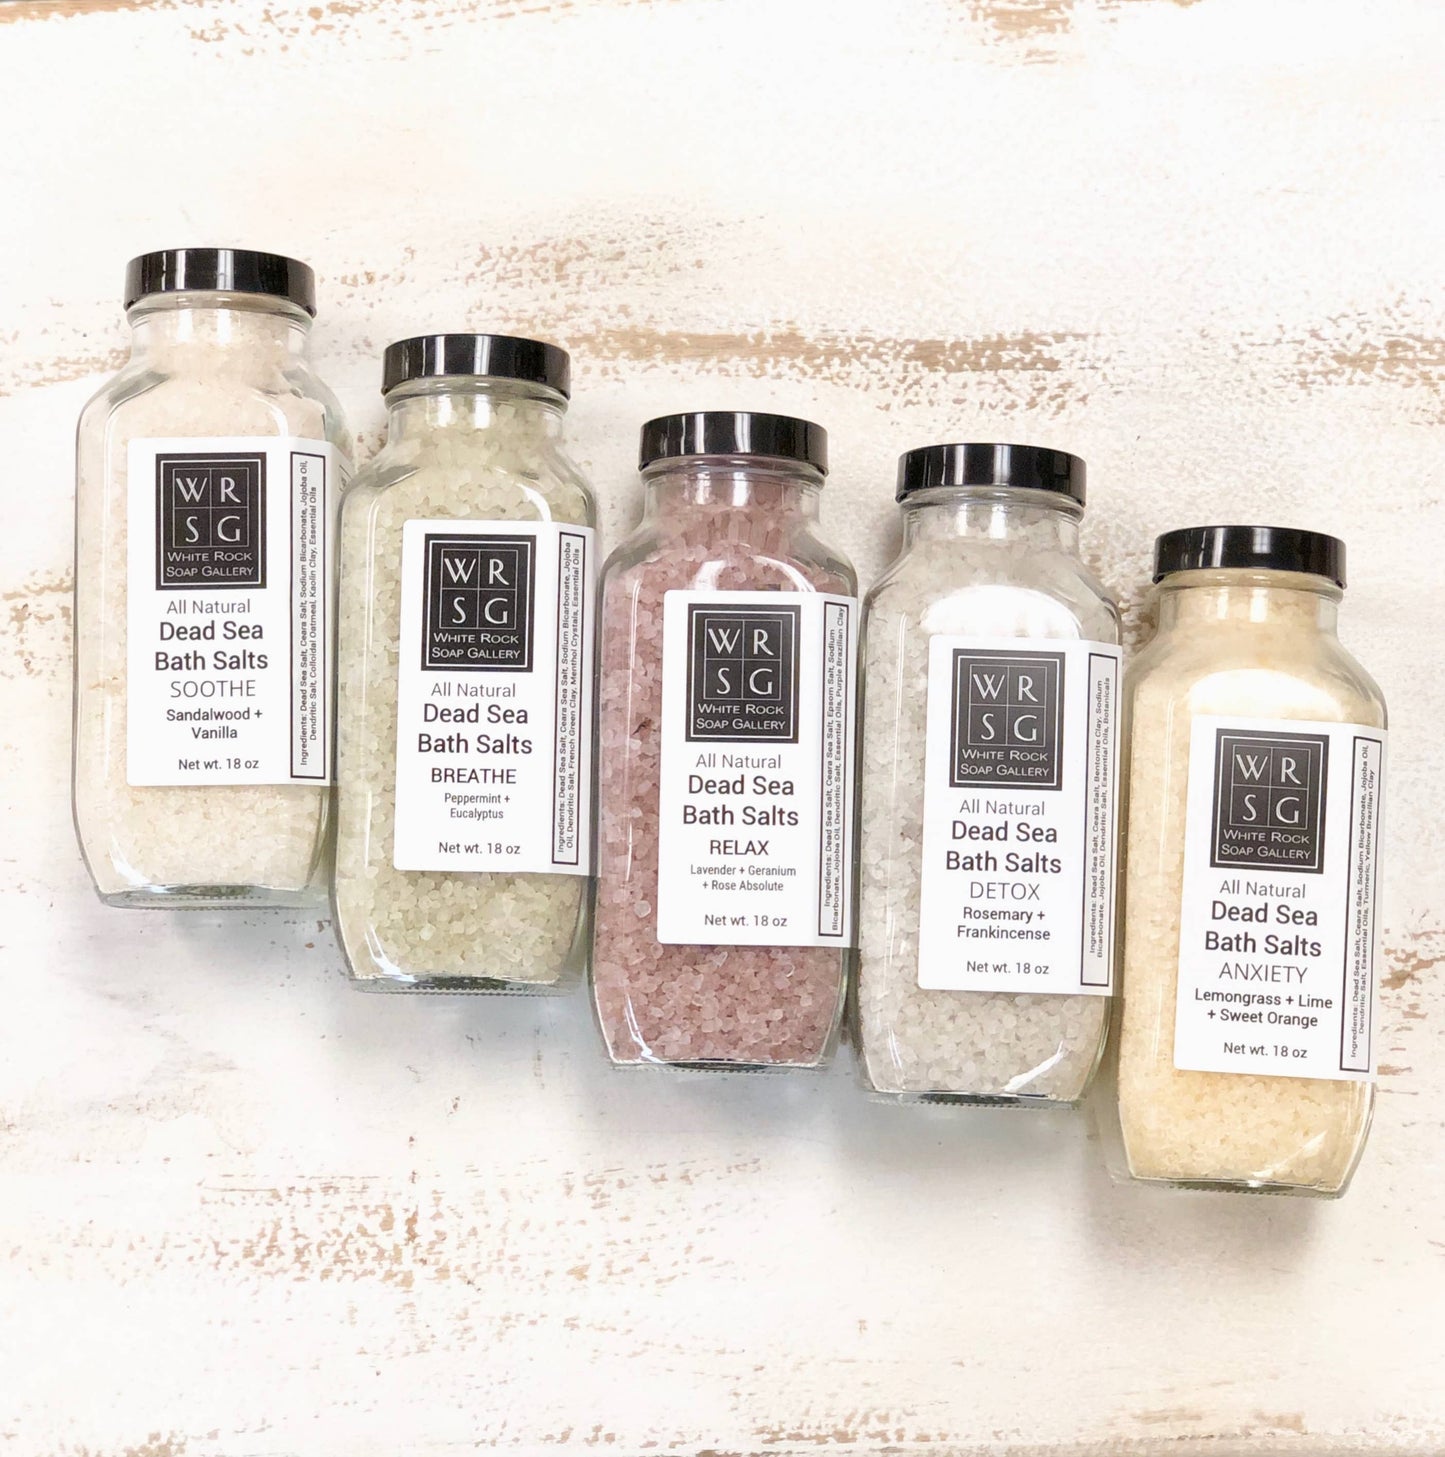 White Rock Soap Gallery - Dead Sea Bath Salts Square Jar: ANXIETY - Lemongrass + Lime + Sweet Orange